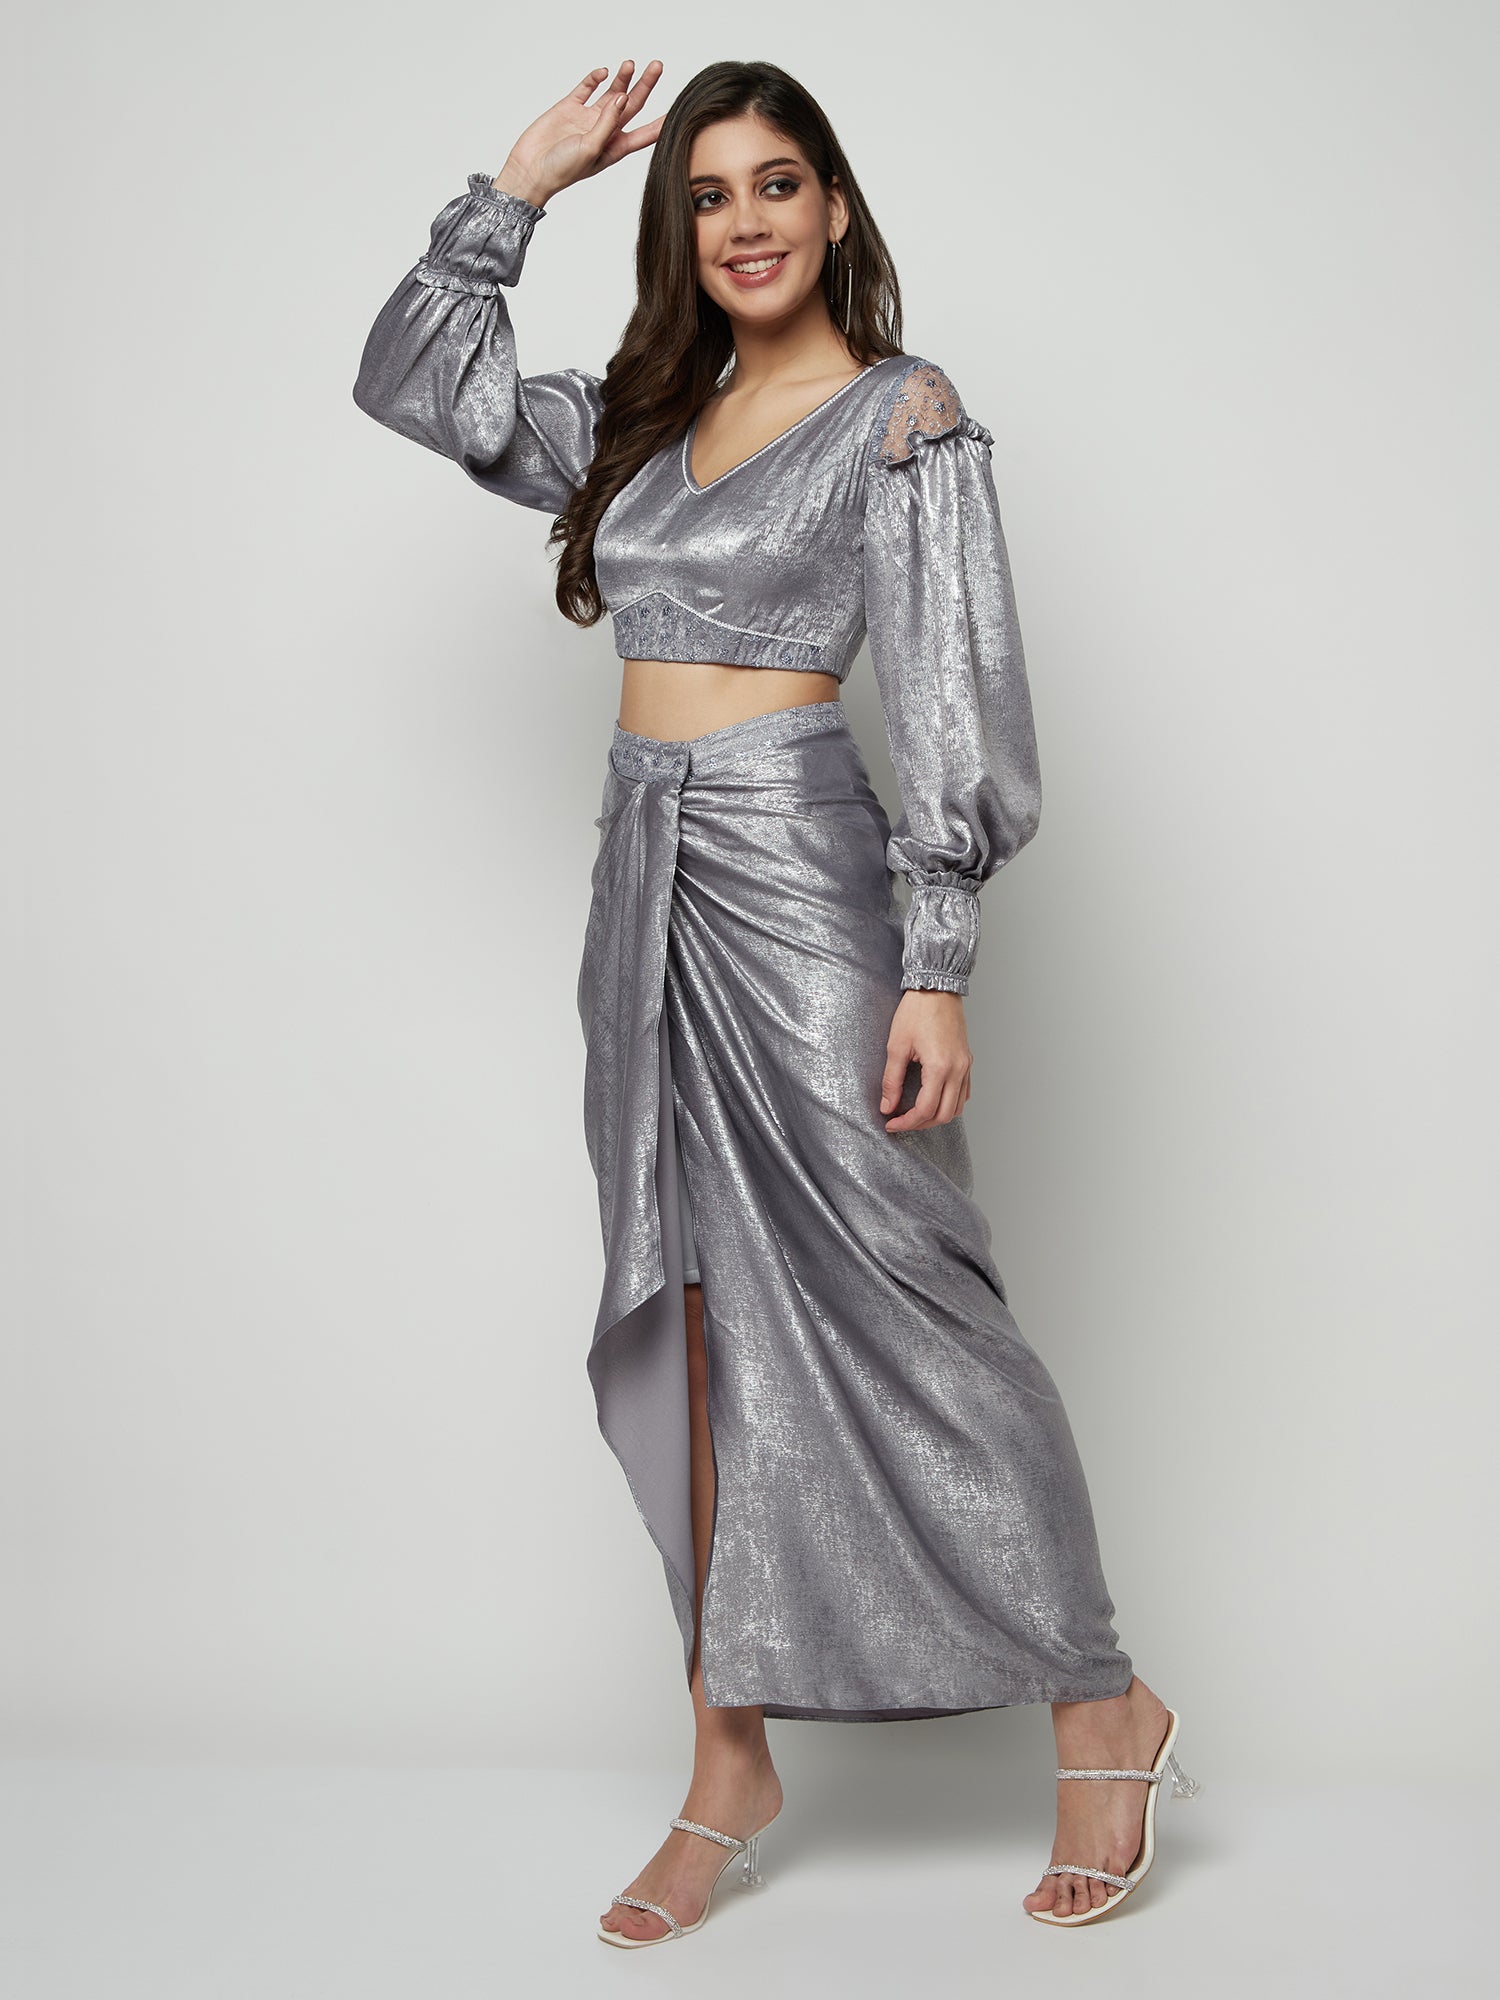 Sleek Silver Glamour Coord Set